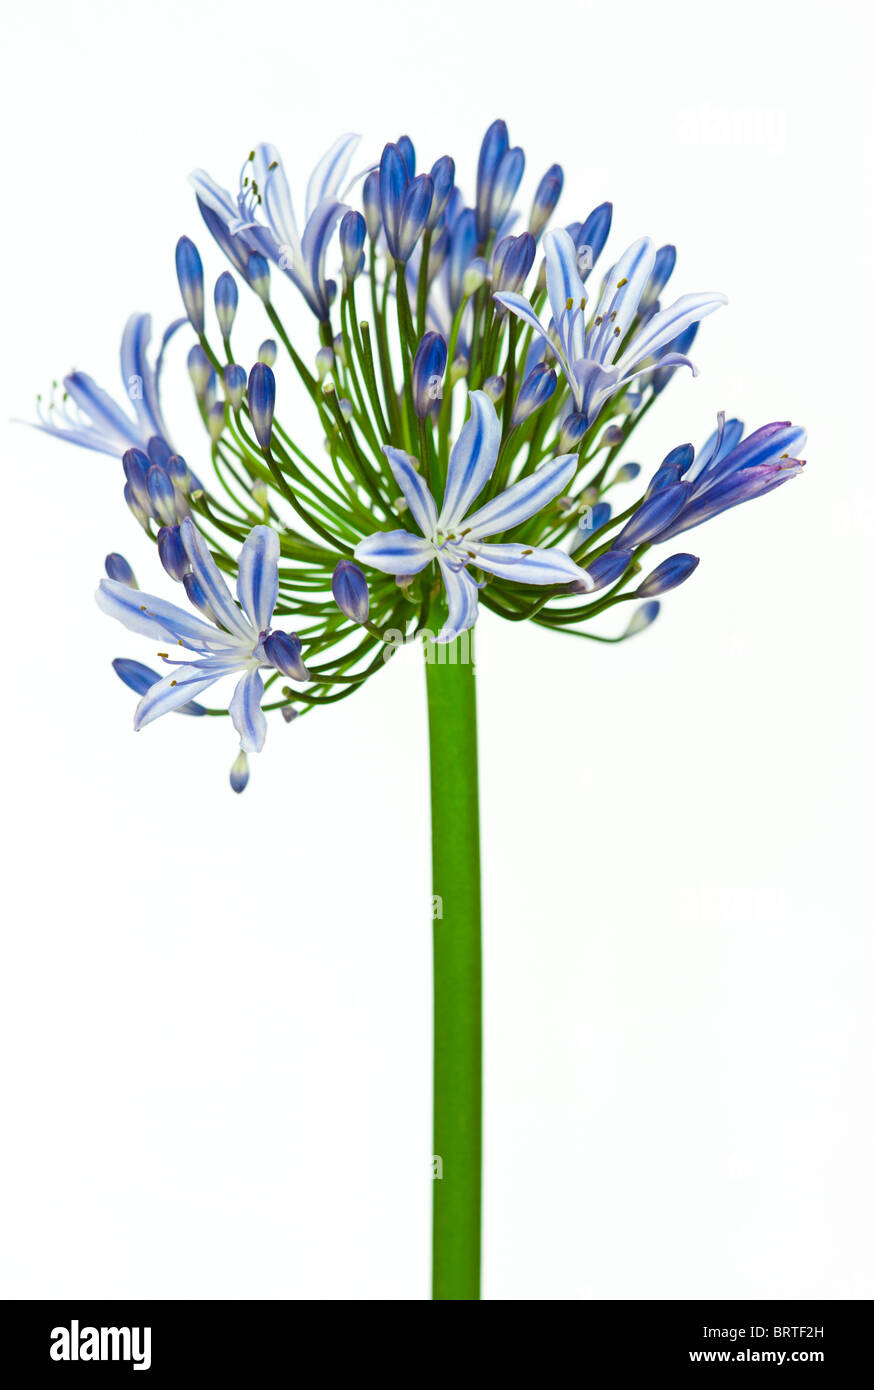 Blue Agapanthus Flower Stem on White Background Stock Photo